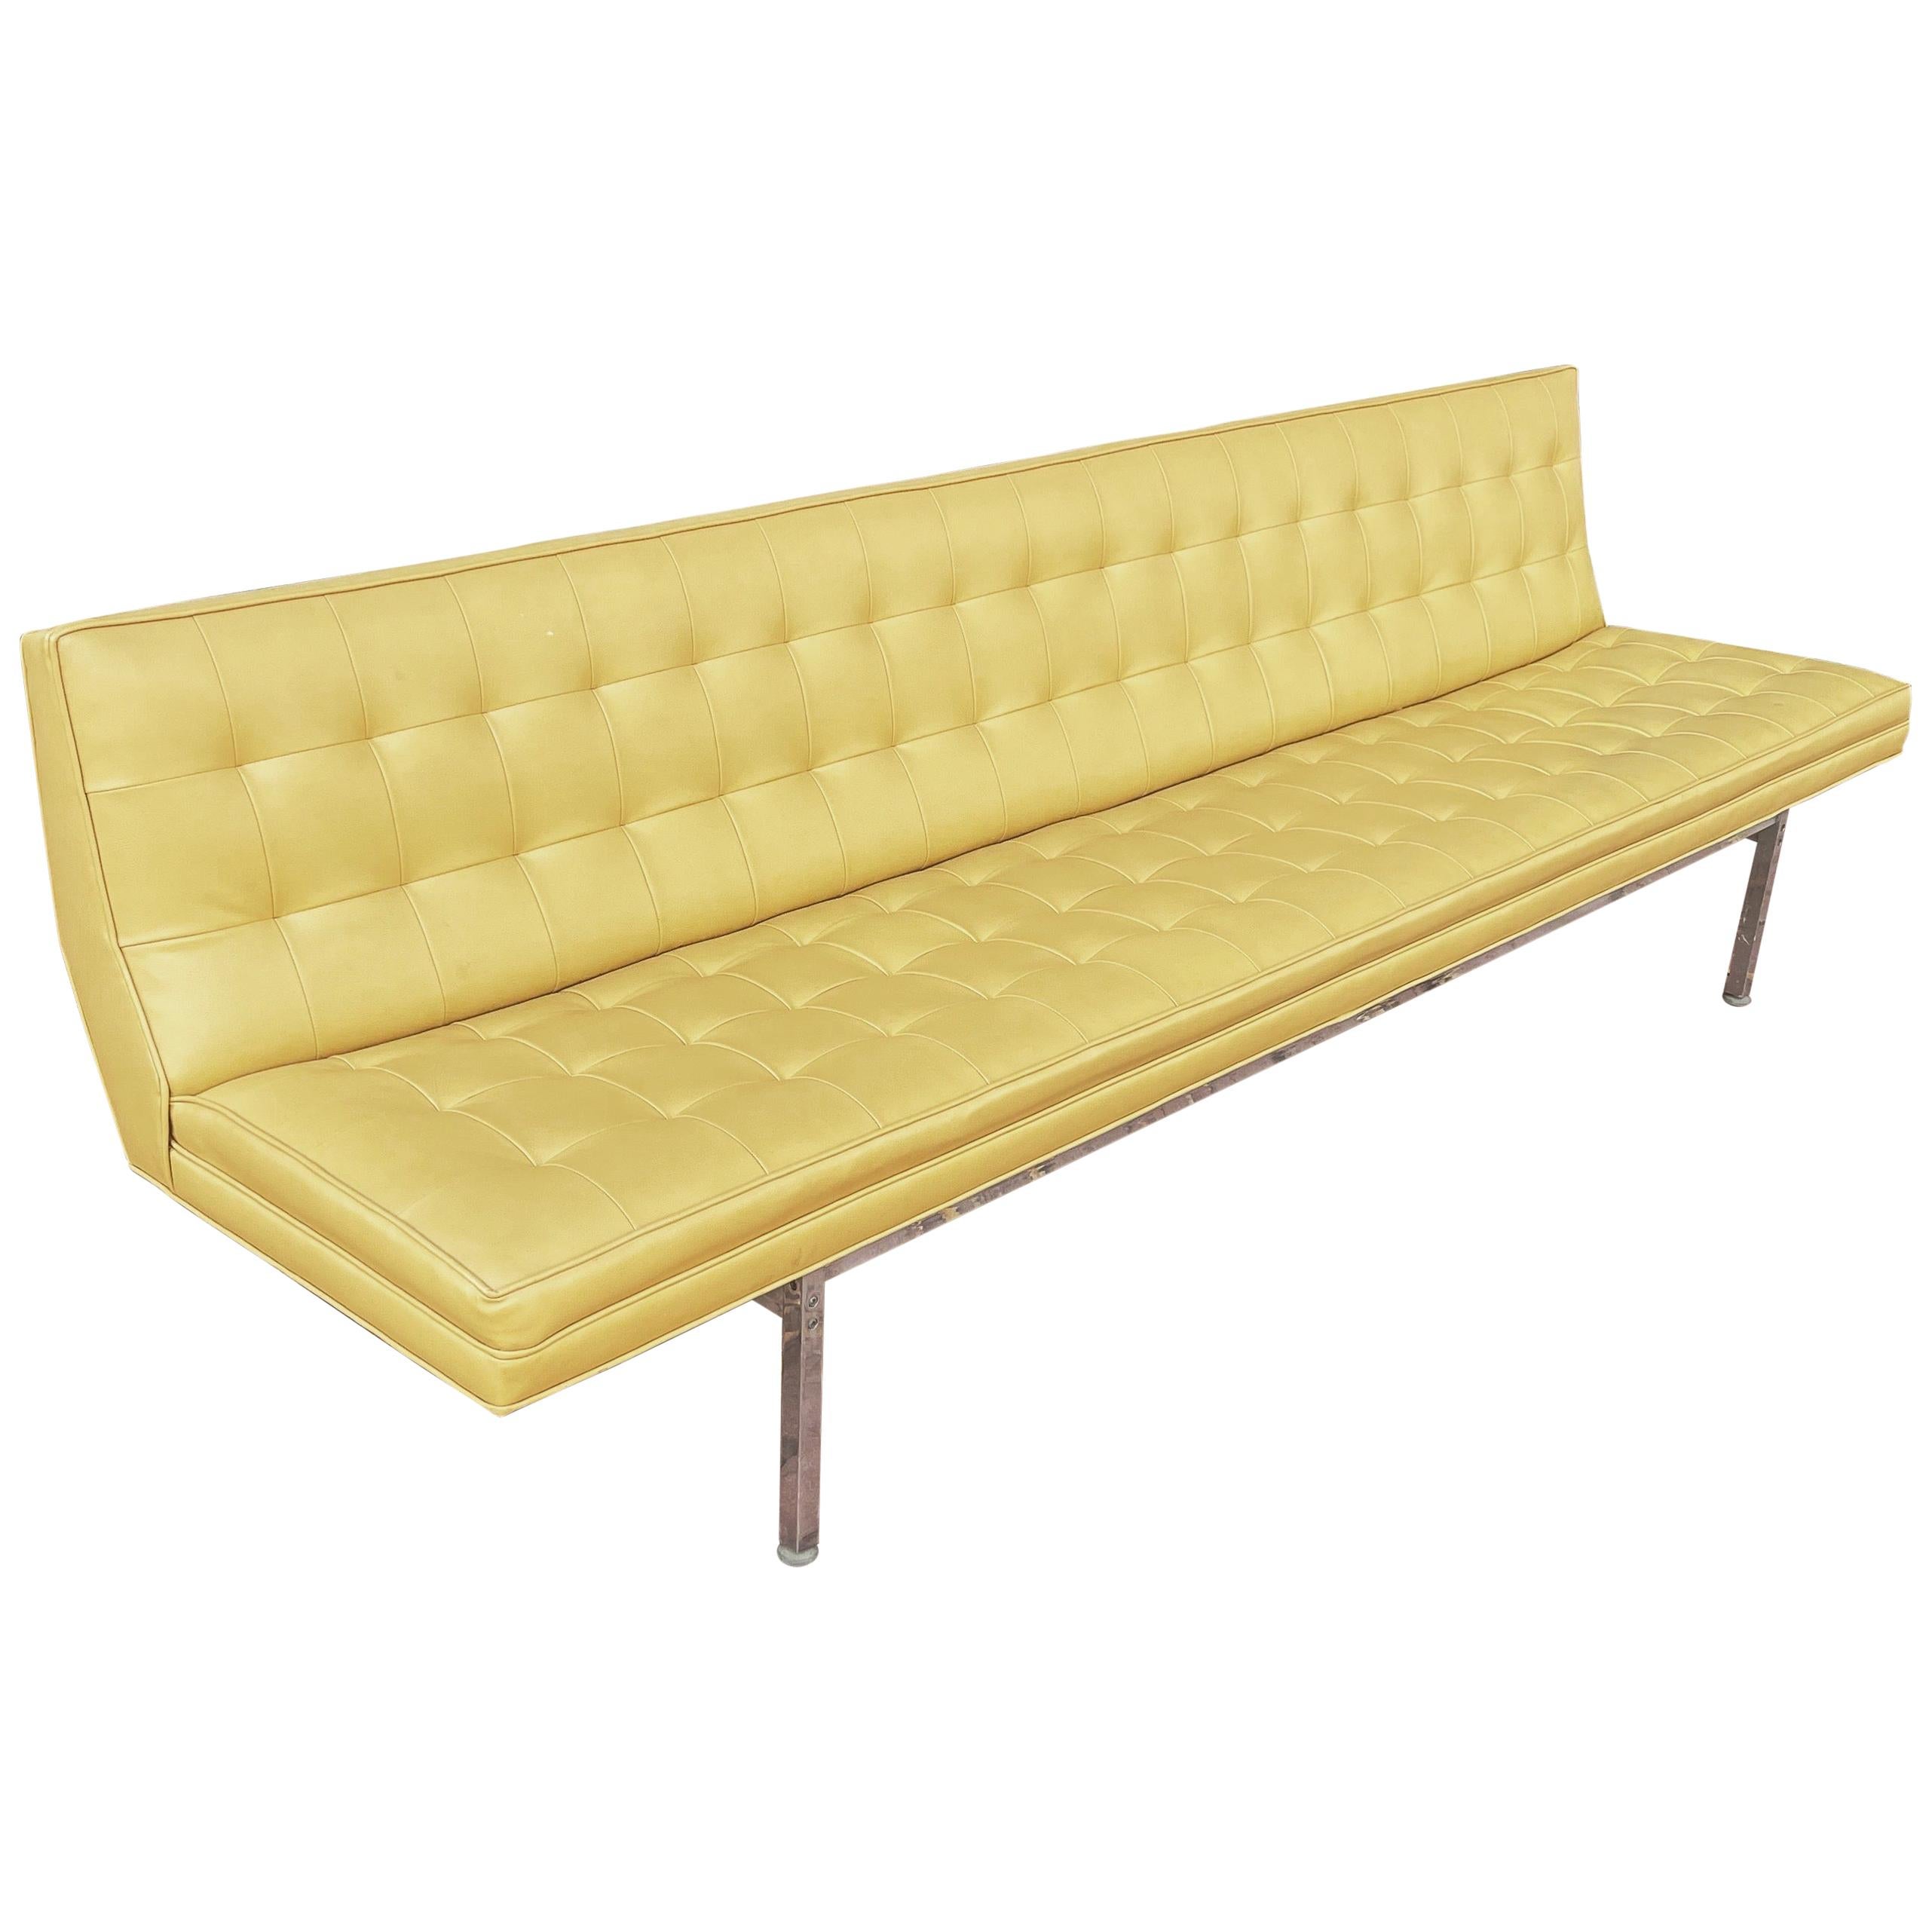 Striking Mid-Century Modern Long Armless Sofa Original Naugahyde on Aluminum